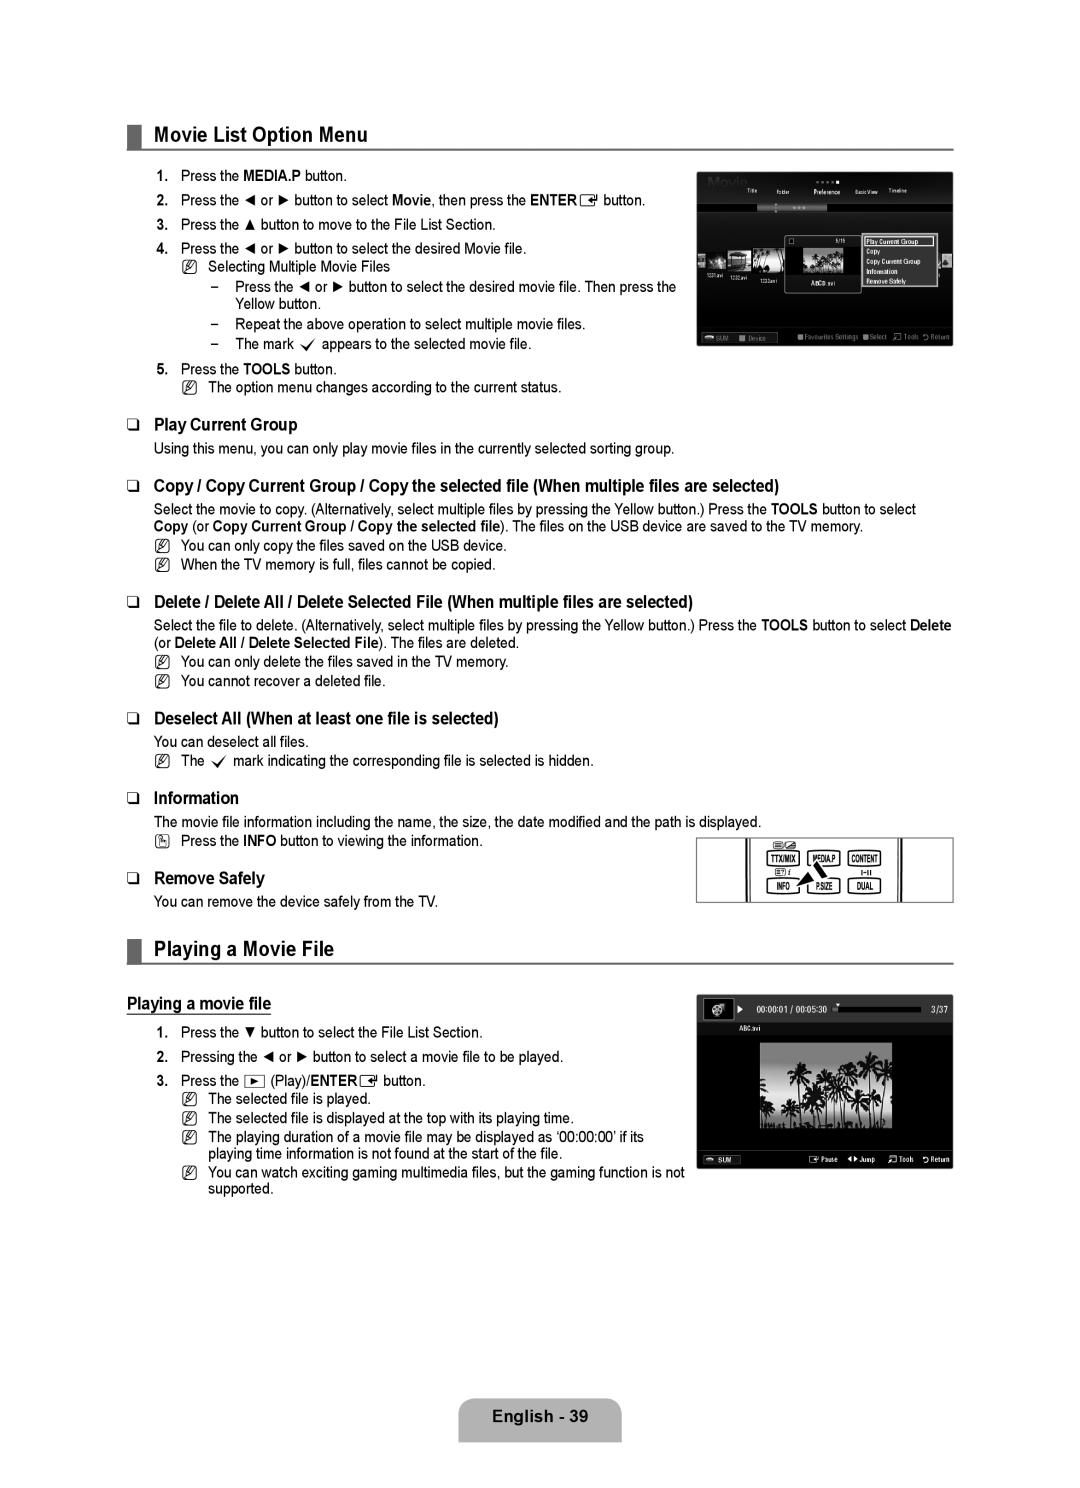 Samsung LA40B750U1R Movie List Option Menu, Playing a Movie File, Playing a movie file, Play Current Group, Information 